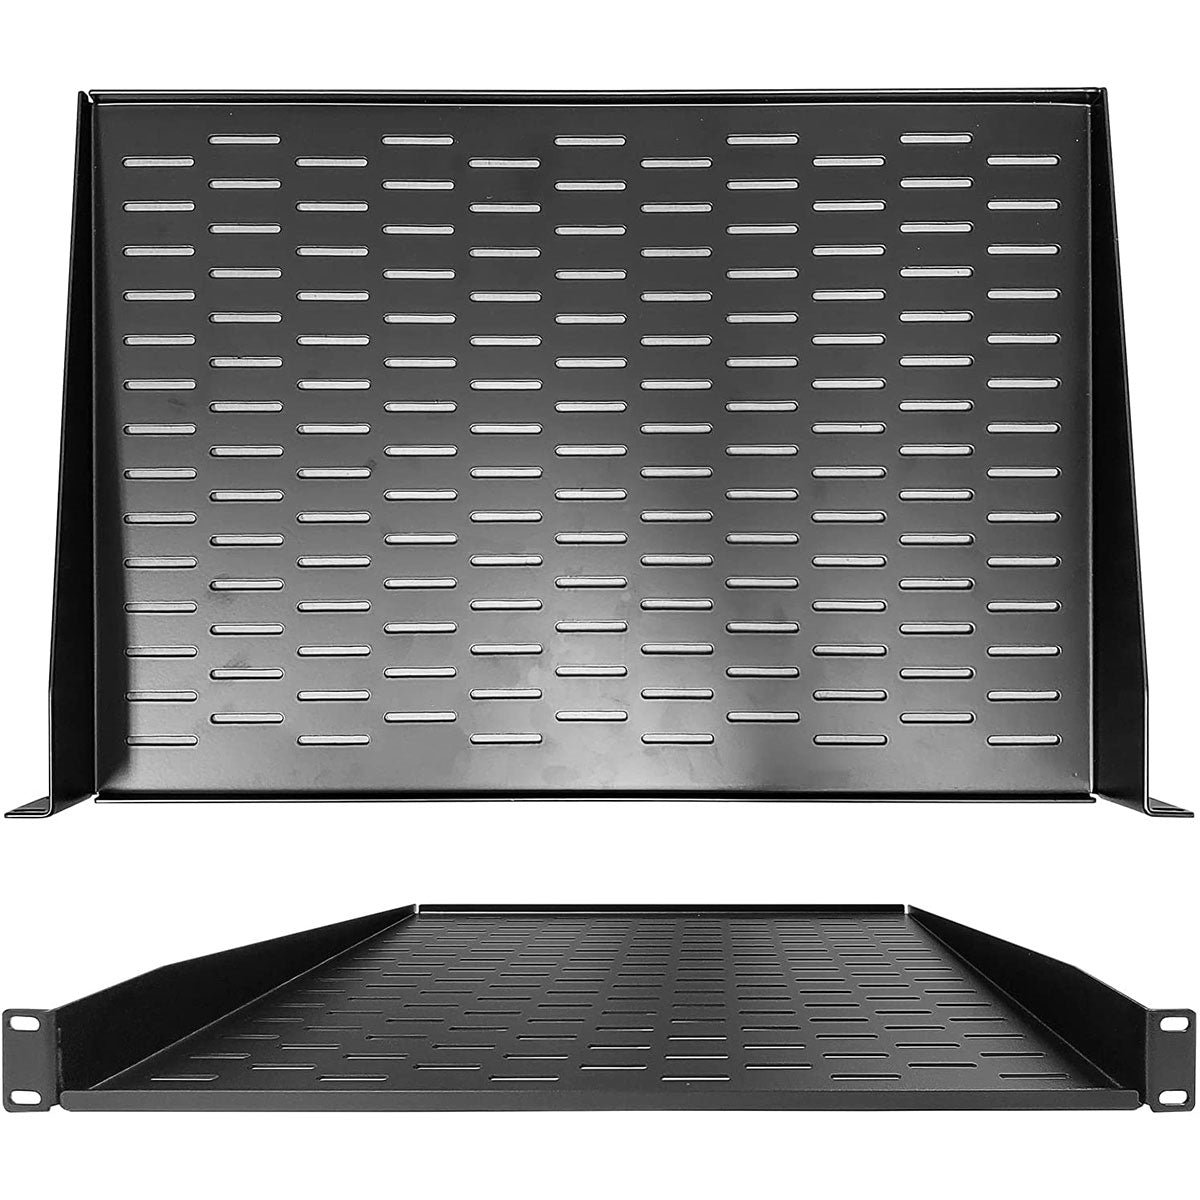 AxcessAbles 1U Vented Server Rack Shelf | 1U Universal Rack Shelf with Protective Edges for 19" AV Equipment Rack & Cabinet| 12" Deep with Edges. | Single Cast Steel| 44lb Capacity